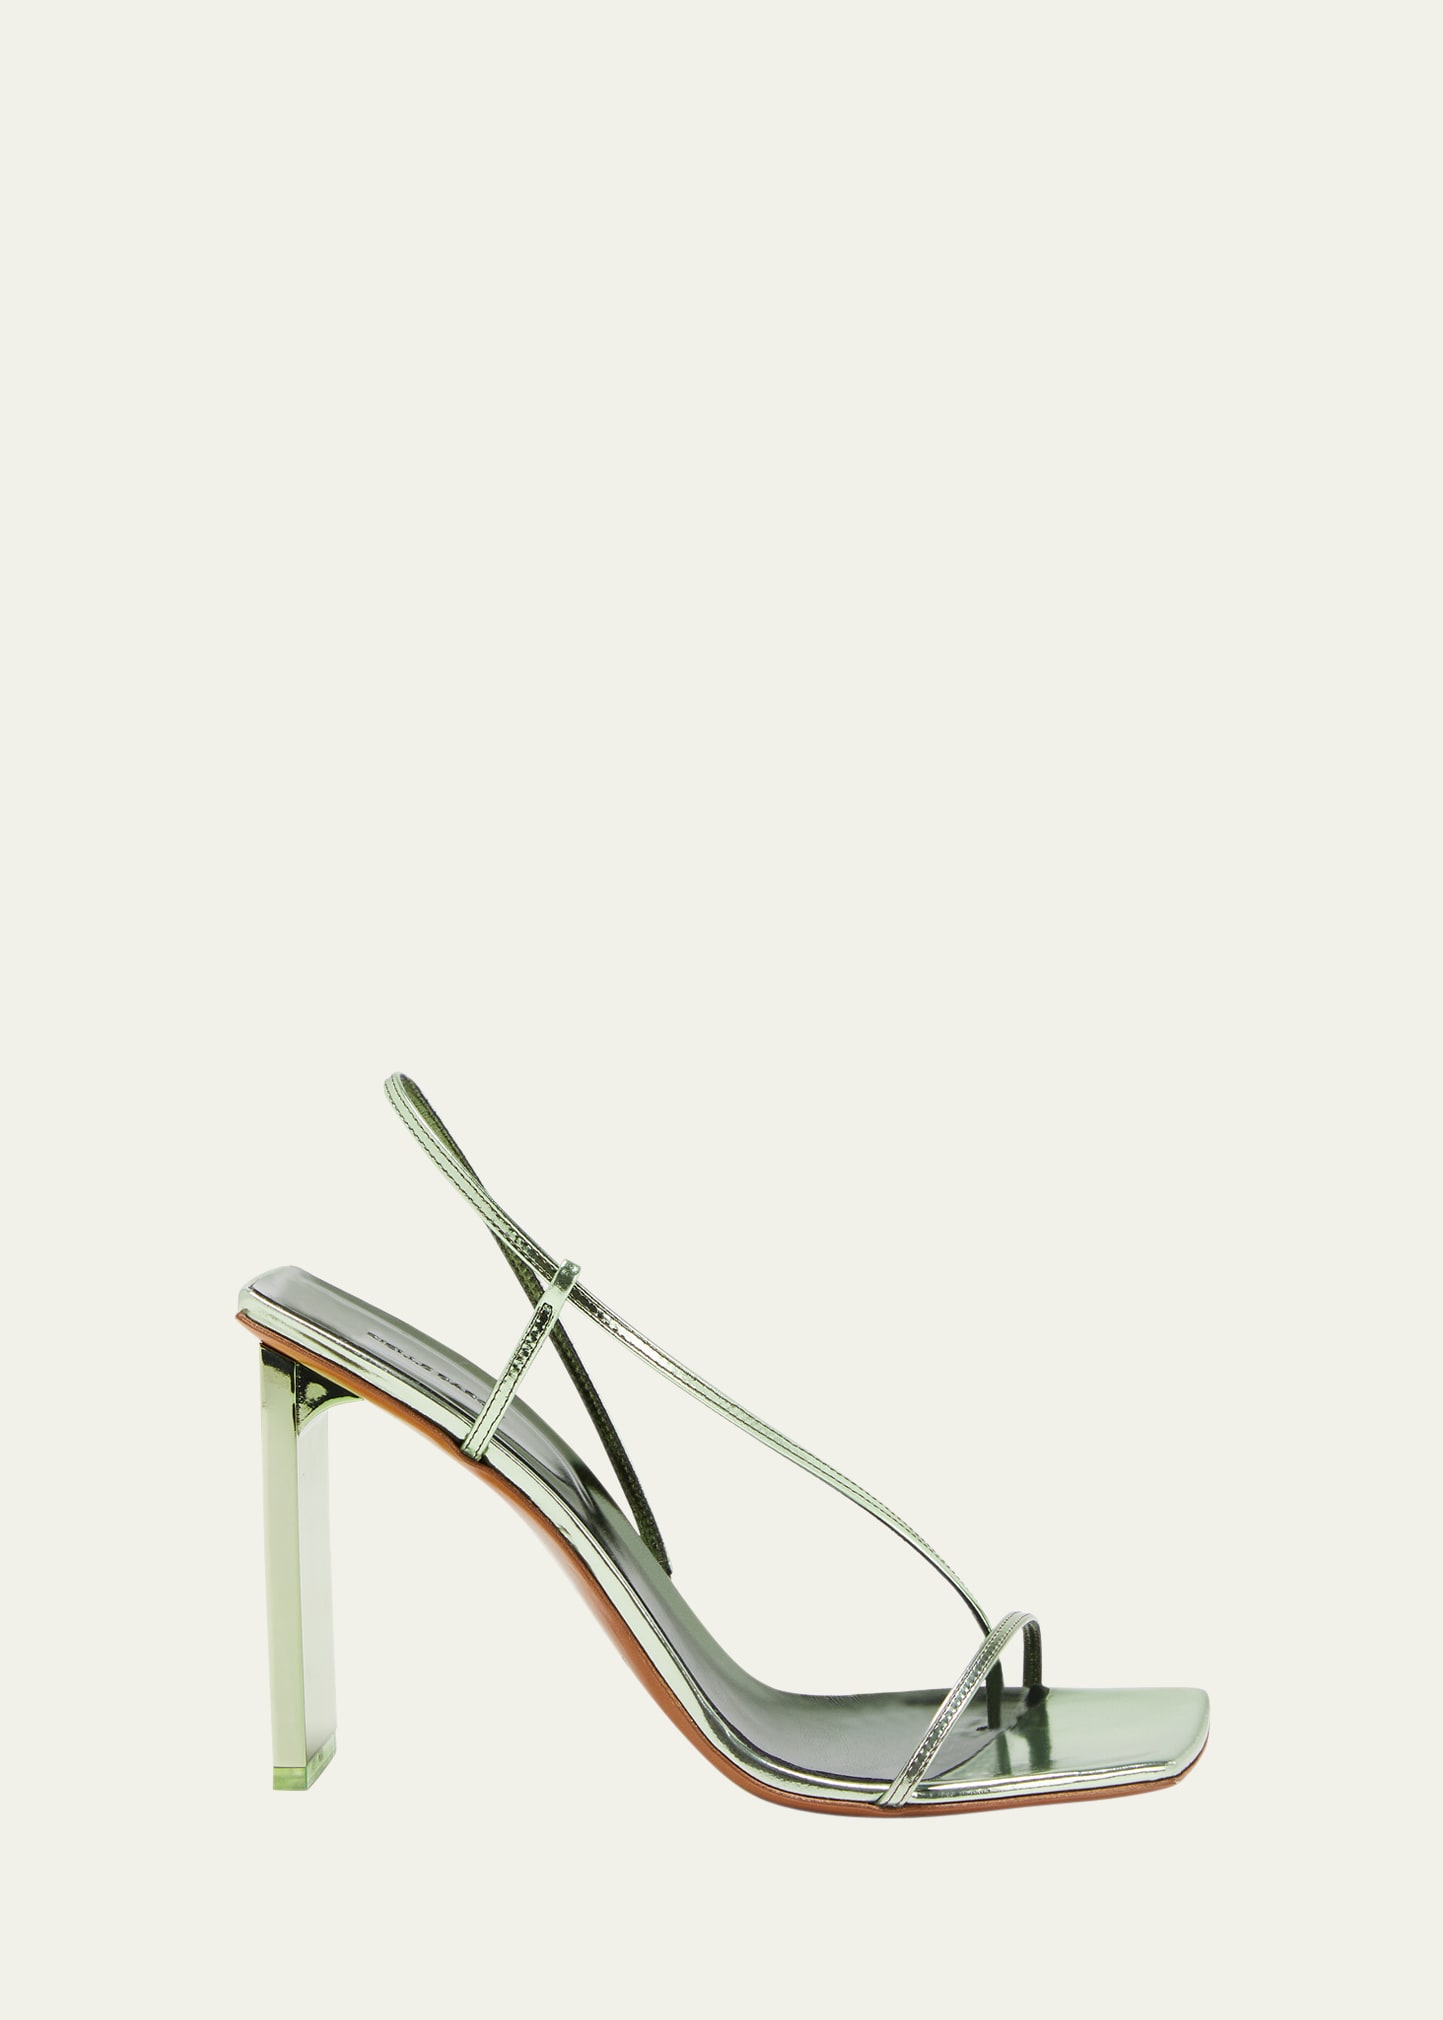 Arielle Baron Narcissus Metallic Slingback Sandals In Green Mirror